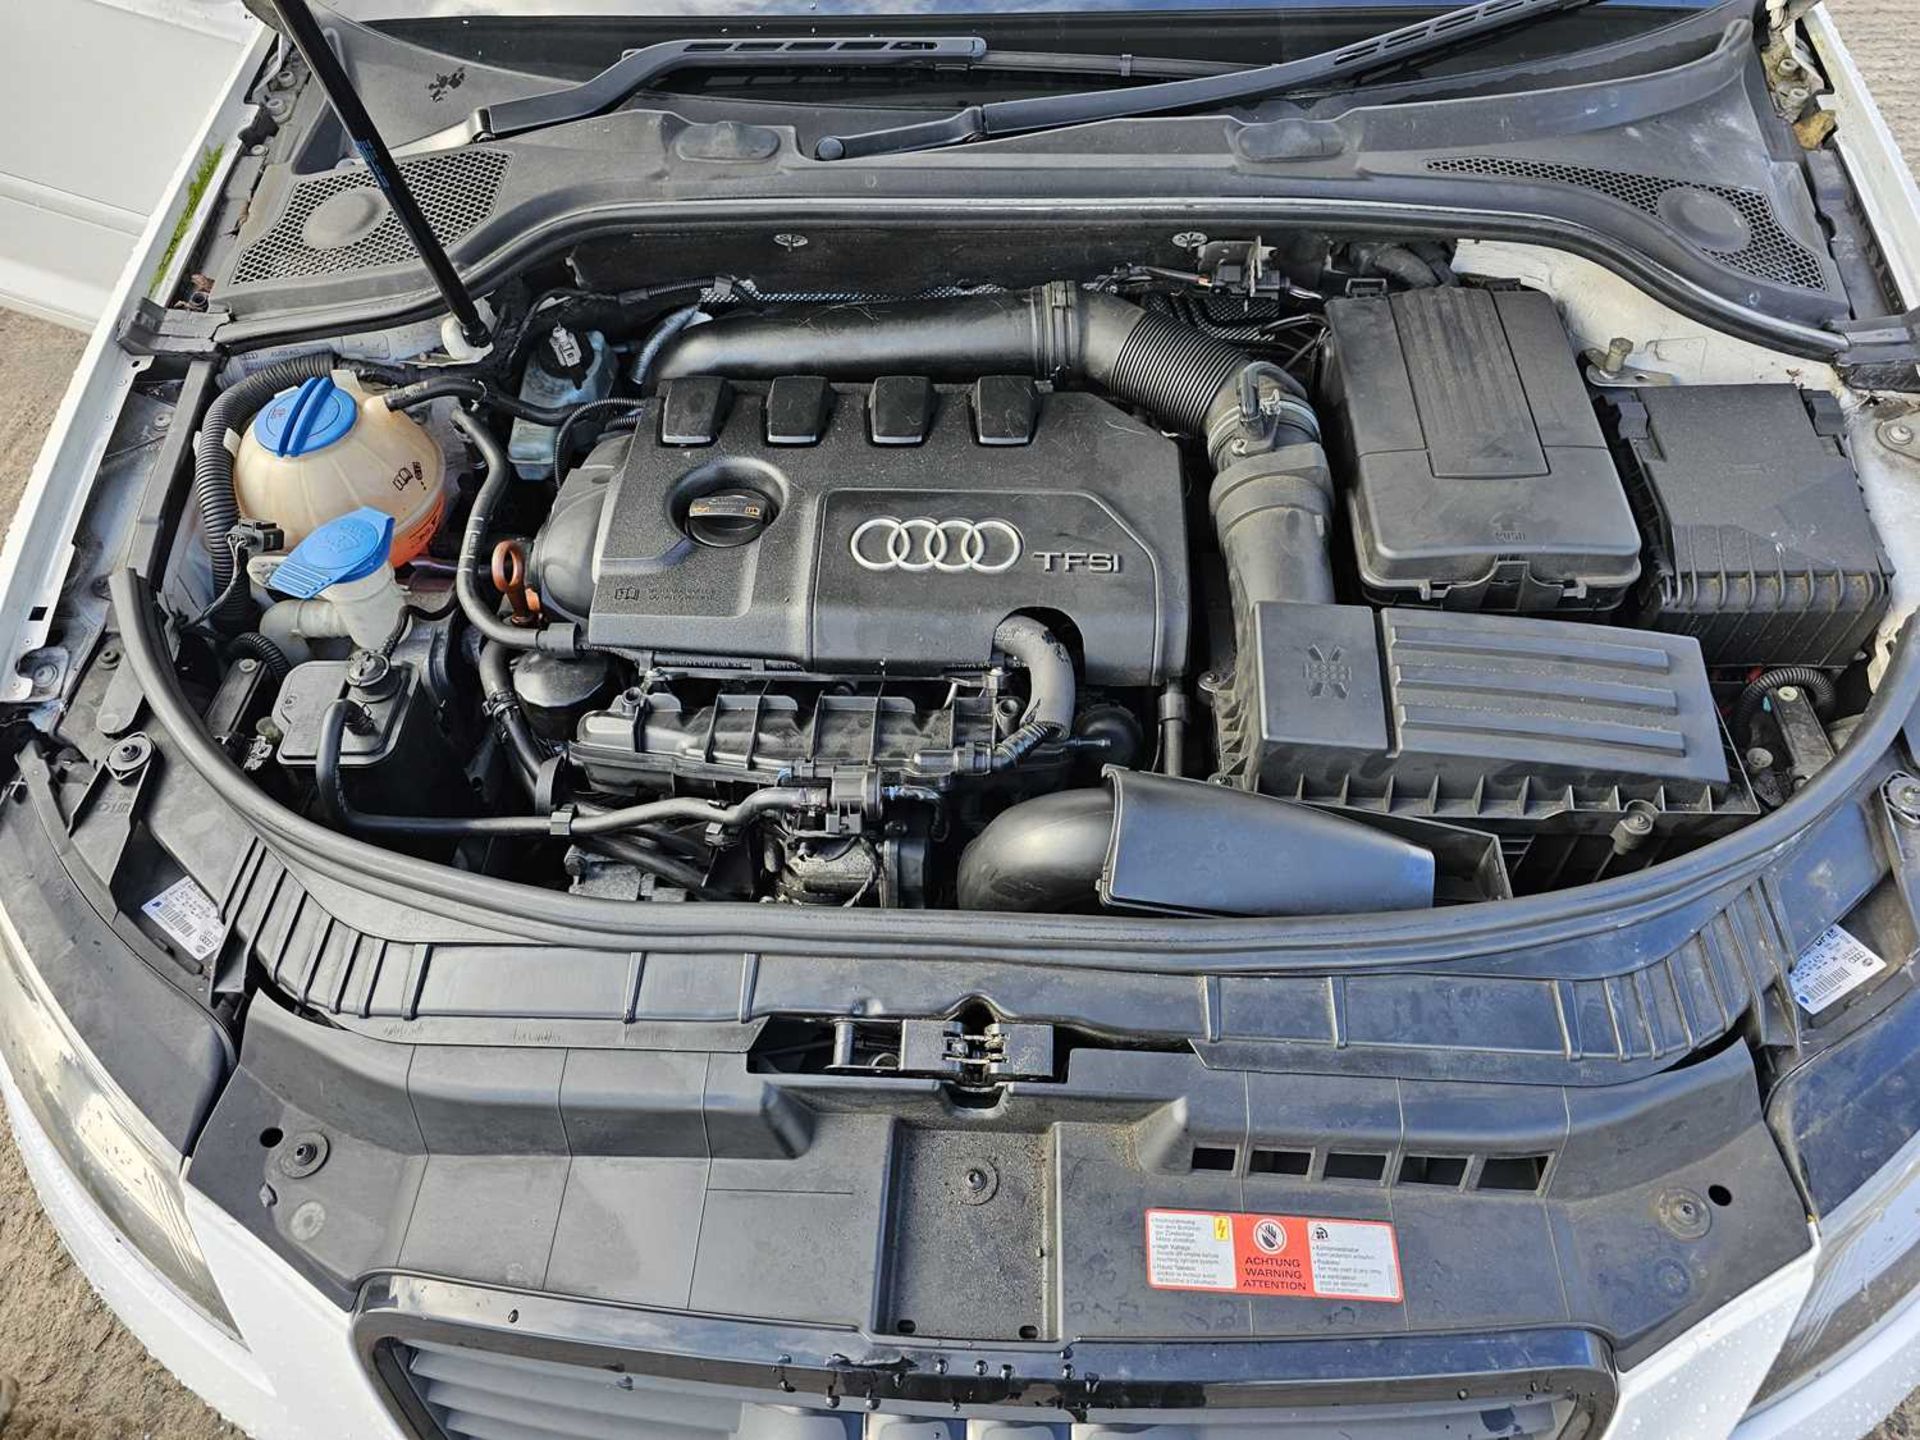 2010 Audi A3, 6 Speed, Half Leather, Bluetooth, Climate Control (Reg. Docs. & Service History Availa - Image 23 of 29